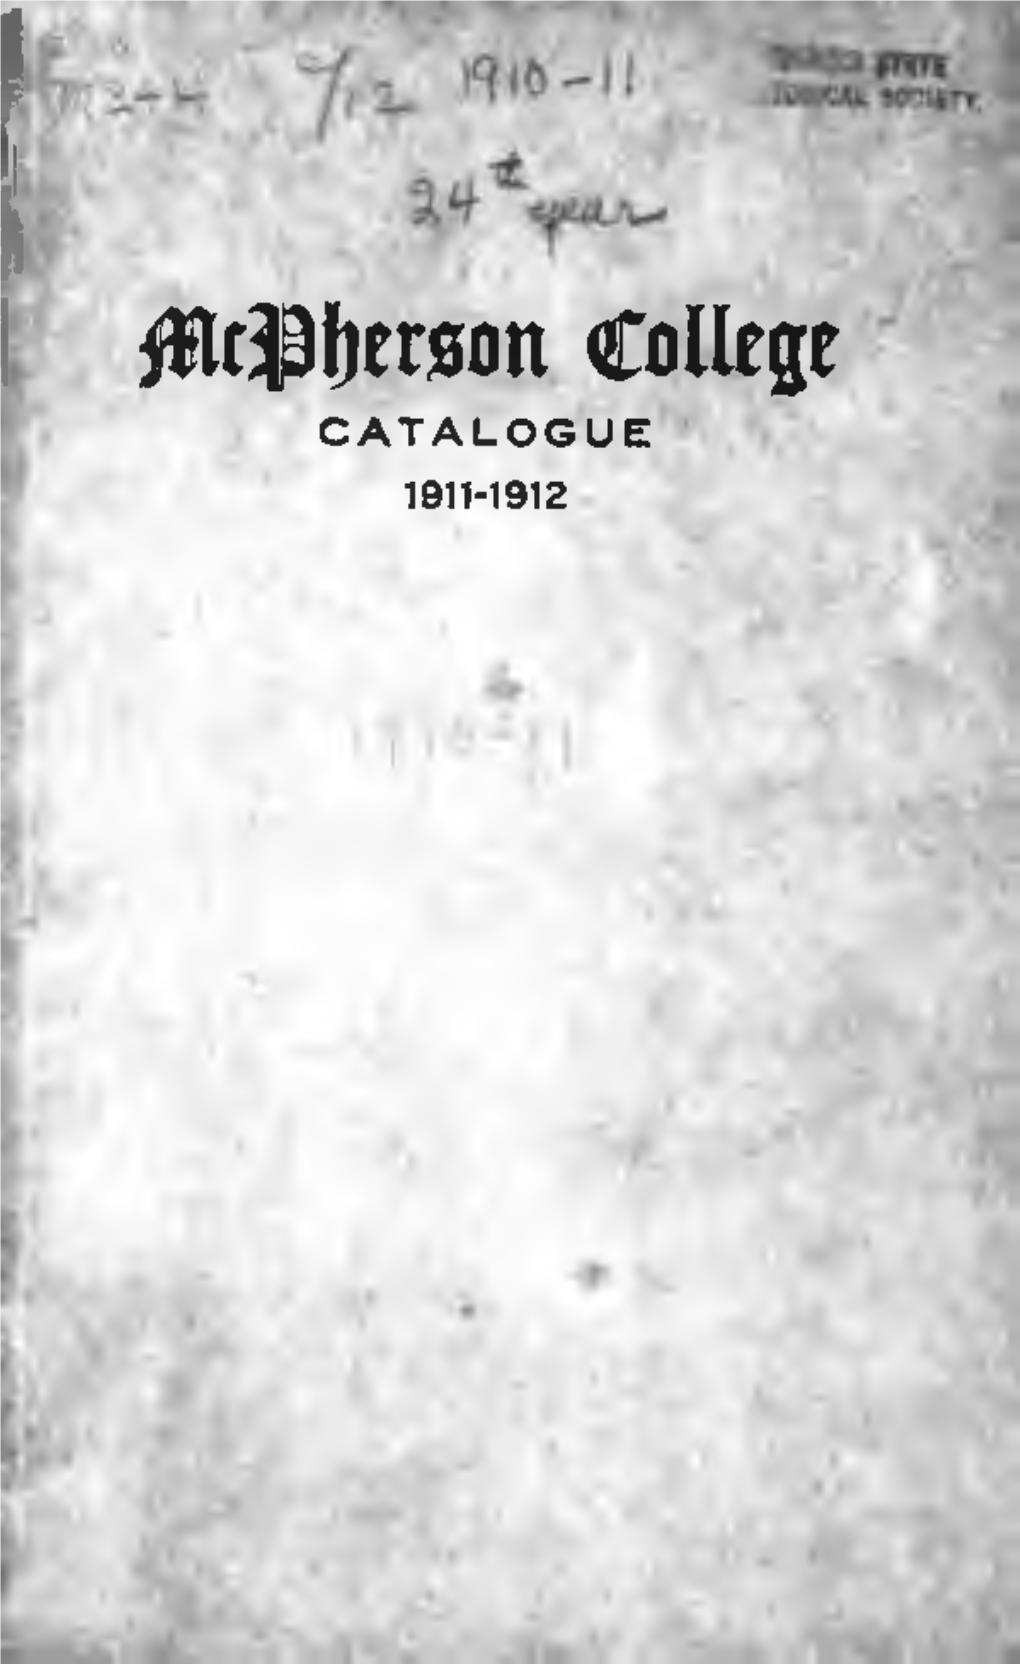 Mcpherson College CATALOGUE 1911-1912